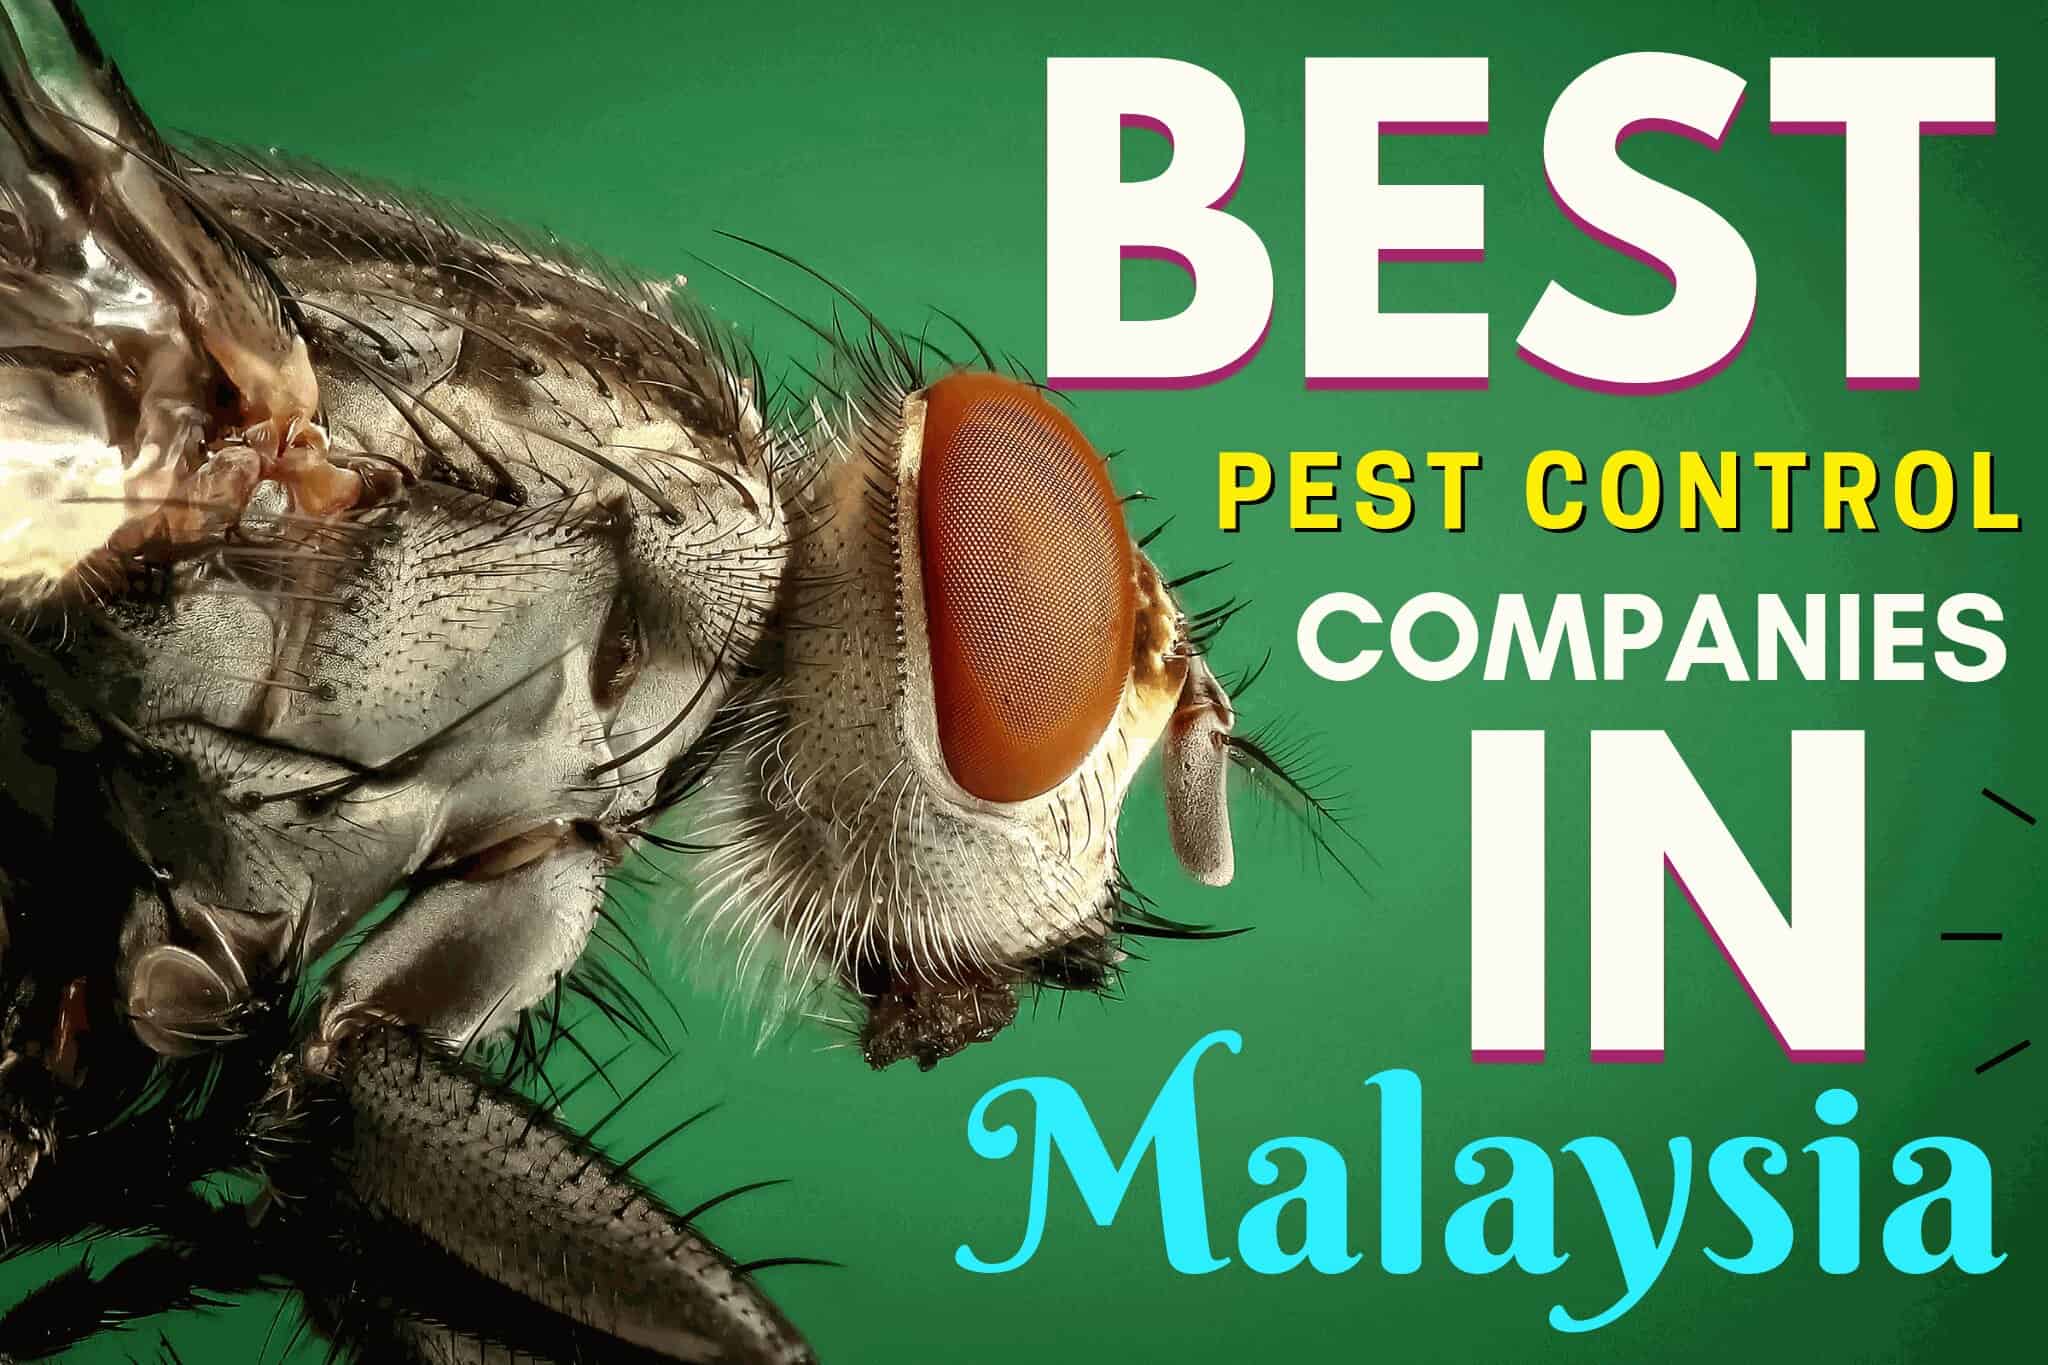 Pest Control Companies In Malaysia